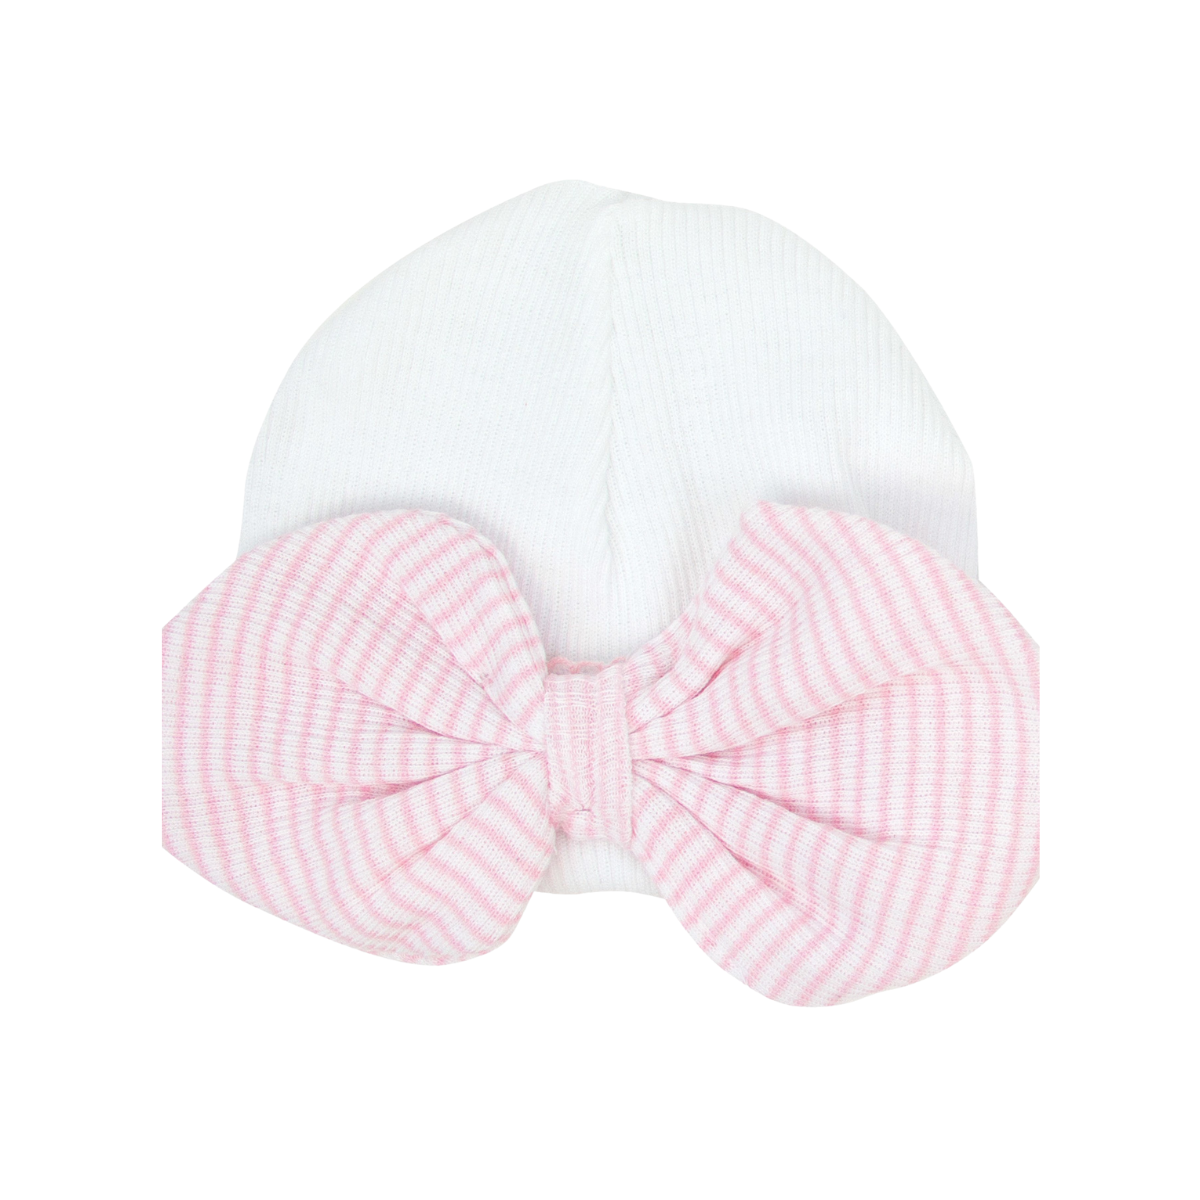 Newborn Bow Hat